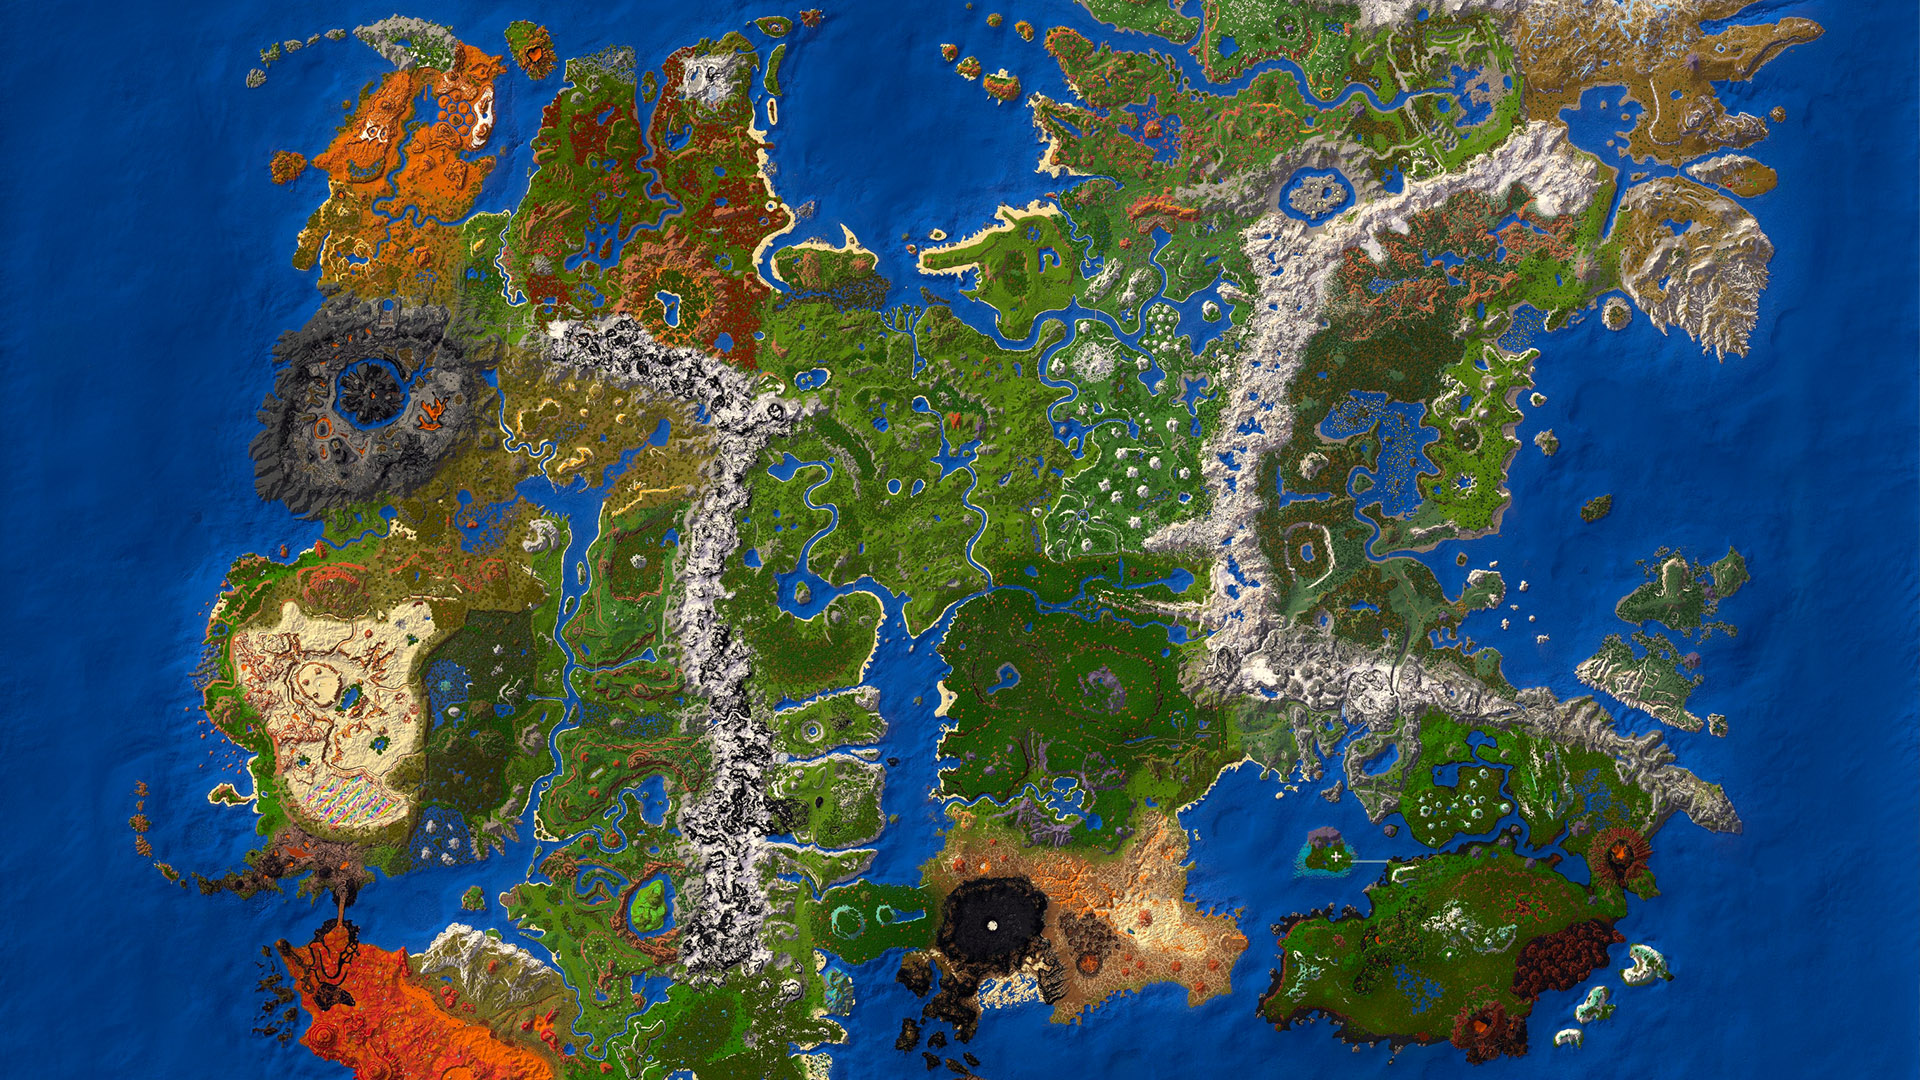 Maps on the Web  Map, Minecraft blueprints, Minecraft